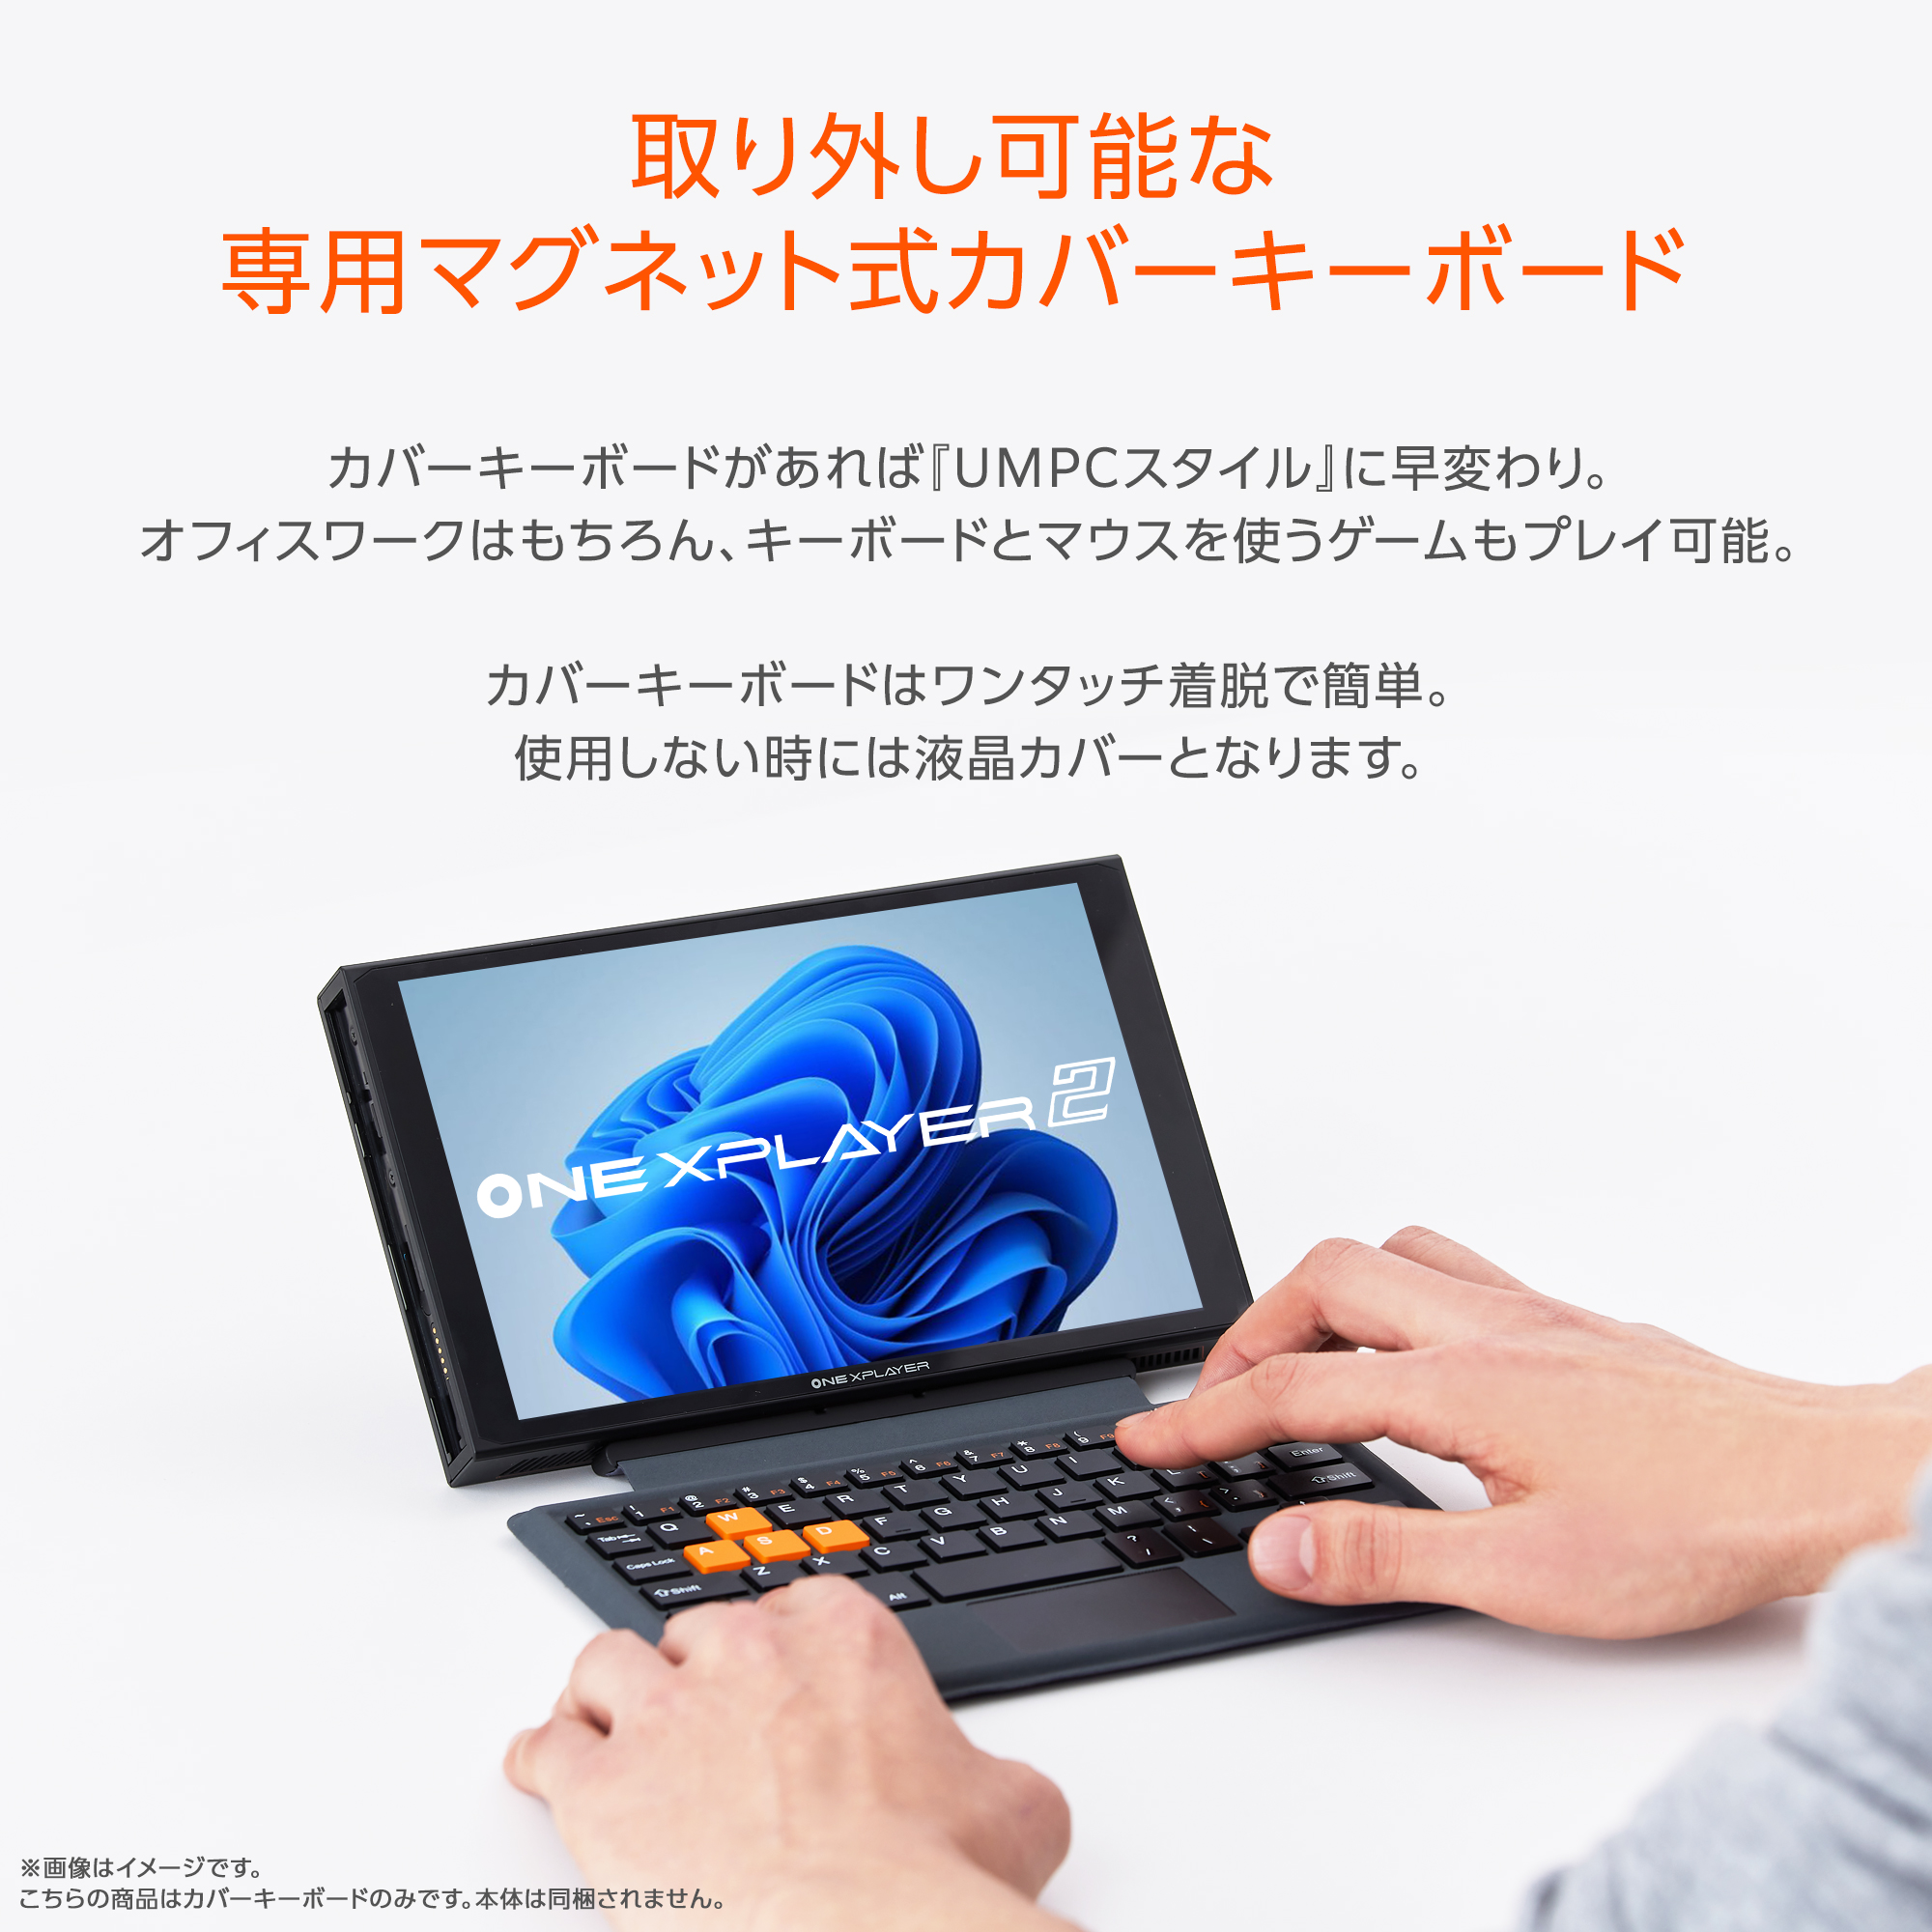 ONEXPLAYER 2 シリーズ専用 カバーキーボード - One-Netbookストア